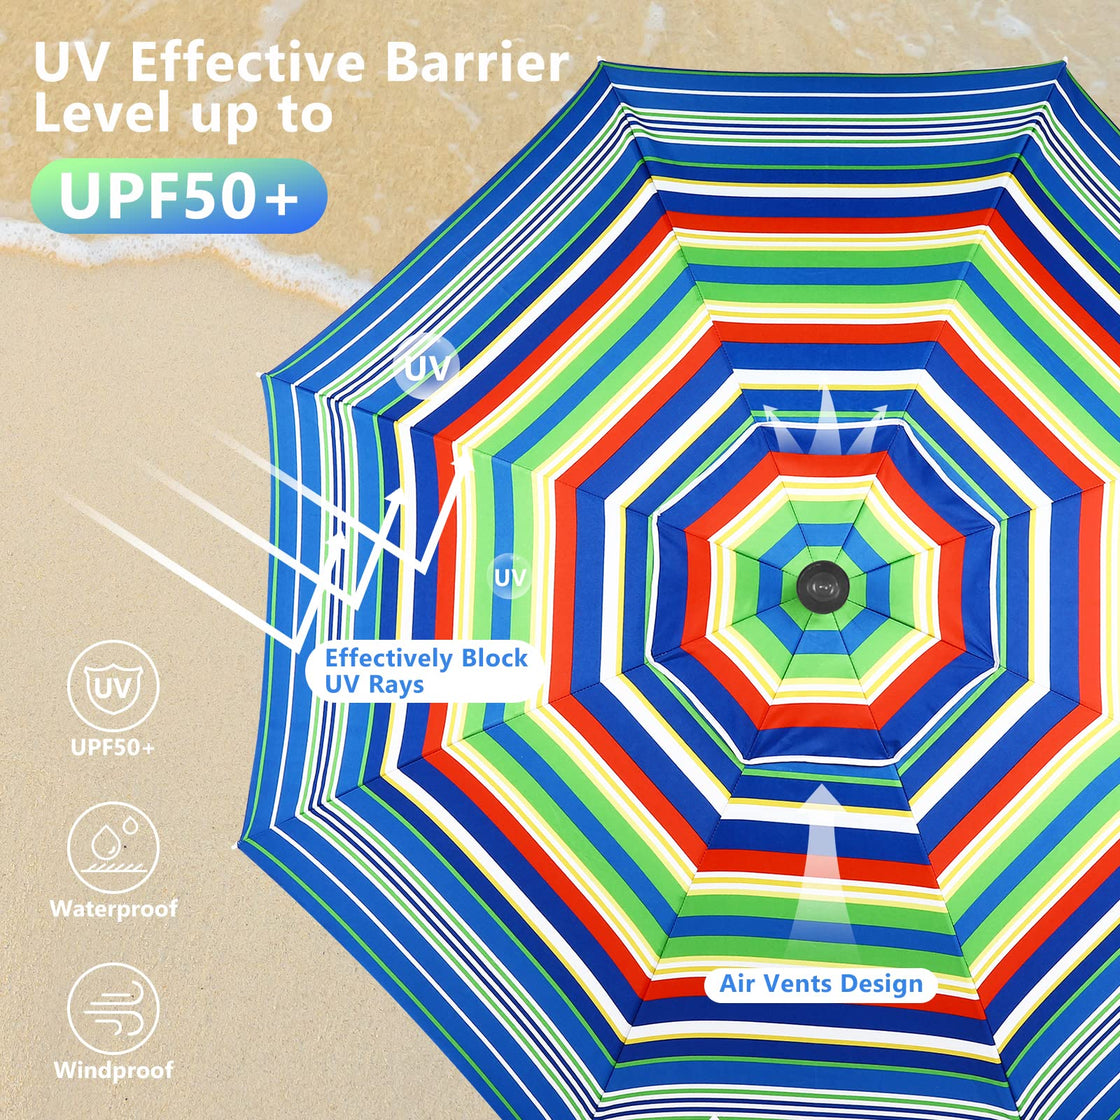 8.5ft Beach Umbrella (BlueRed Stripe,8.5ft)